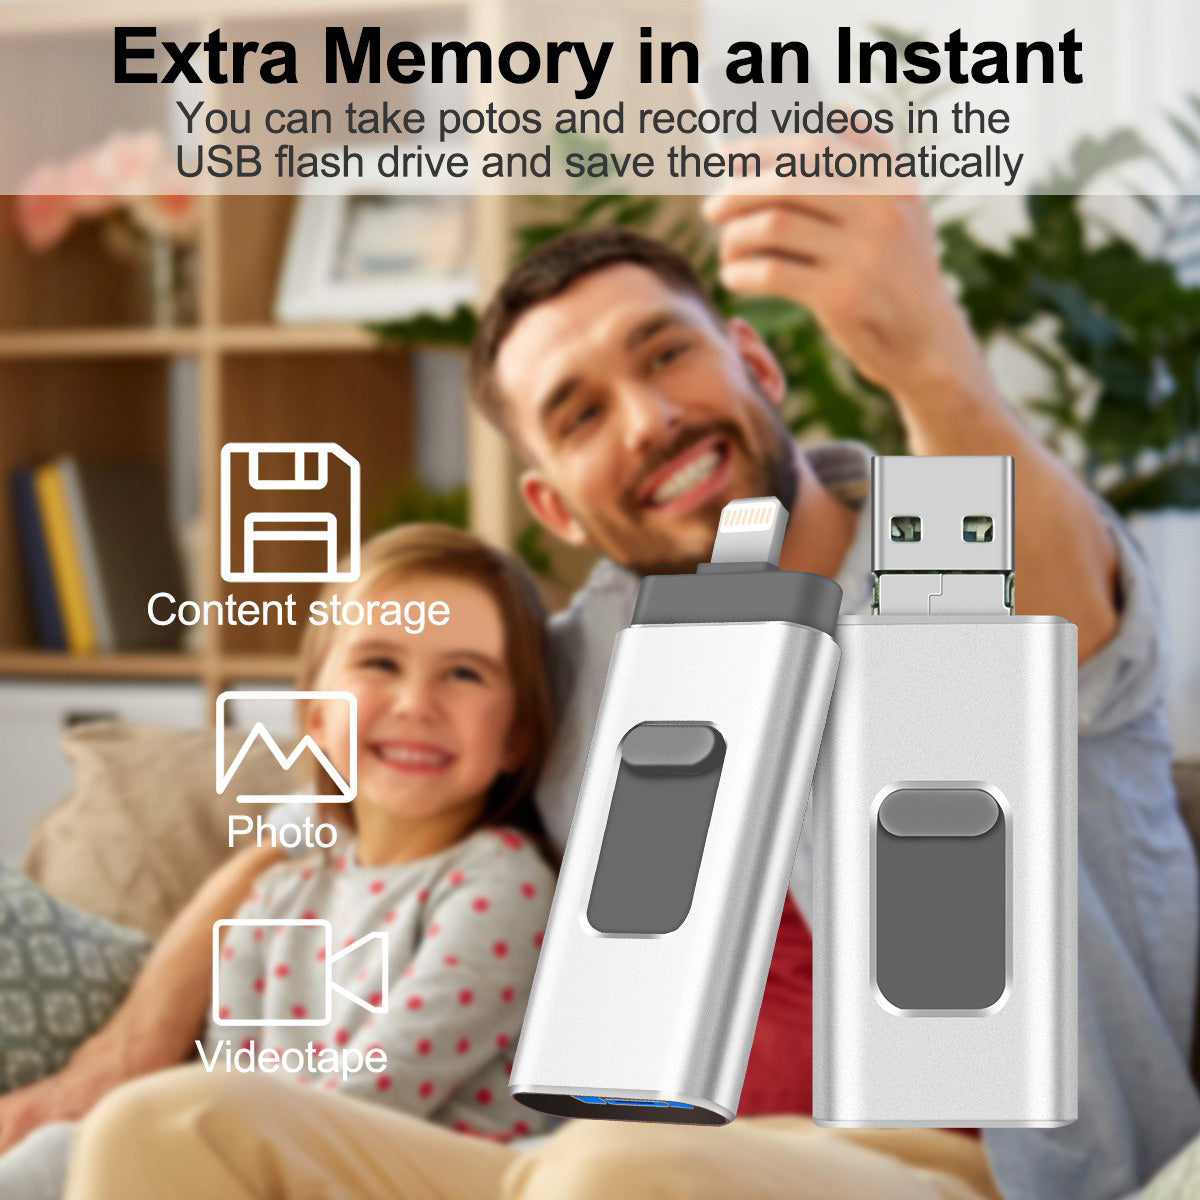 Uniqkart R-01B 64GB Driver Free USB 3.0 Flash Drive USB Memory Stick Thumb Drive Photo Stick for iPhone Android PC - Silver